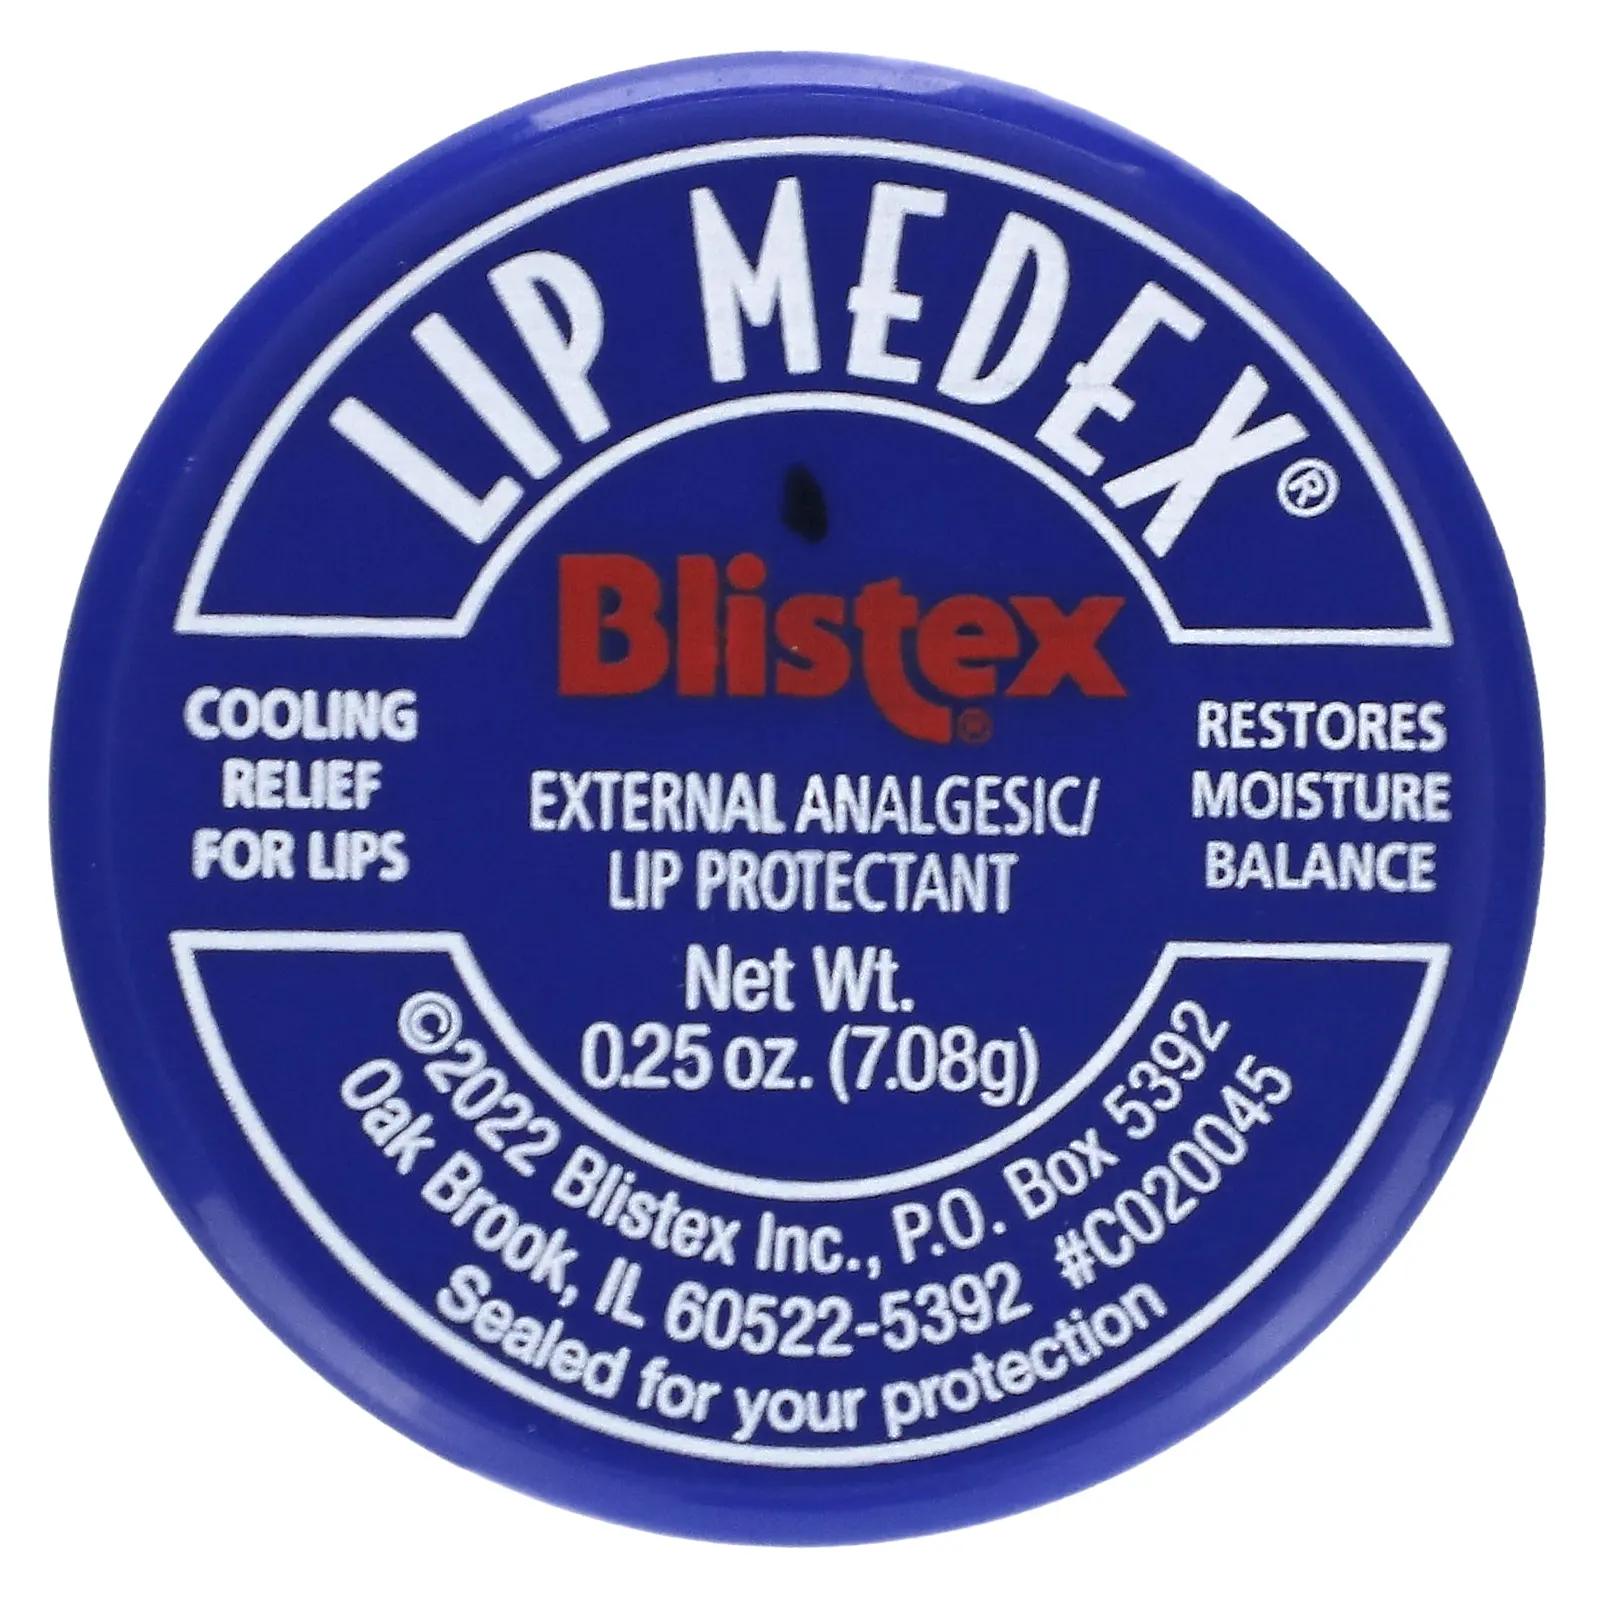 Blistex Lip Medex 3 баночки по 7,08 г (0,25 унции) фотографии